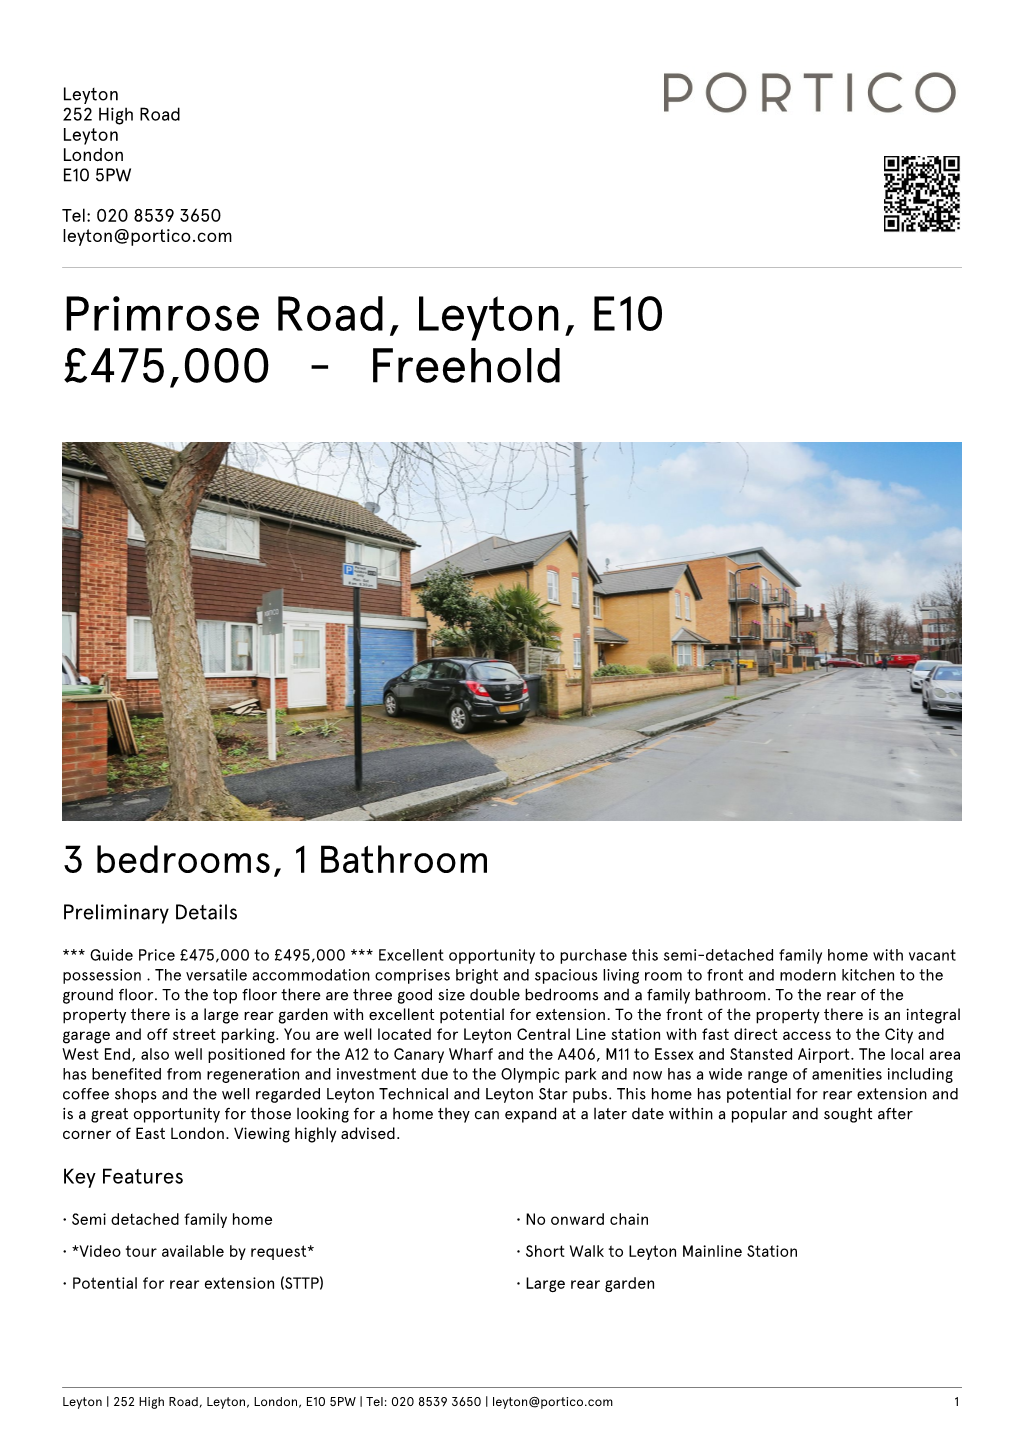 Primrose Road, Leyton, E10 £475,000